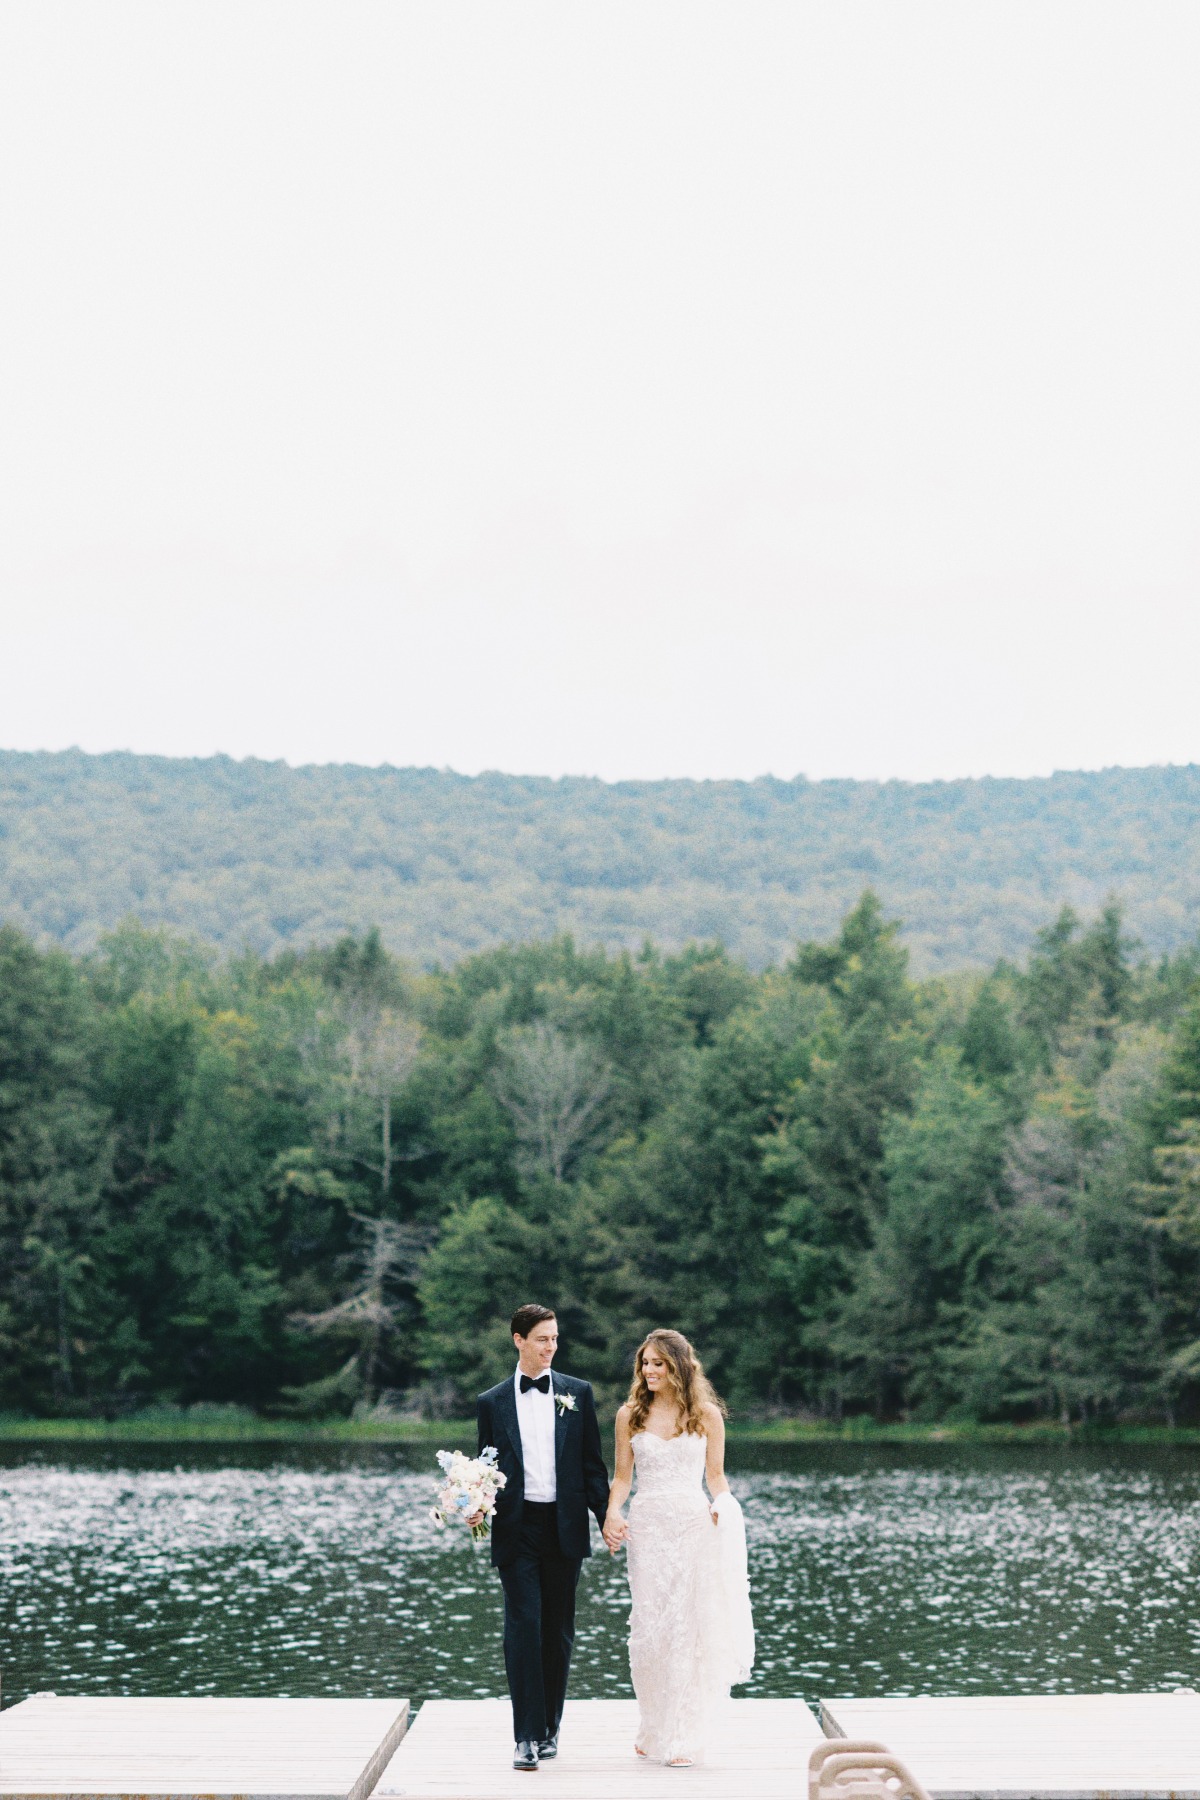 Elegant lakeside wedding in the heart of the Catskills